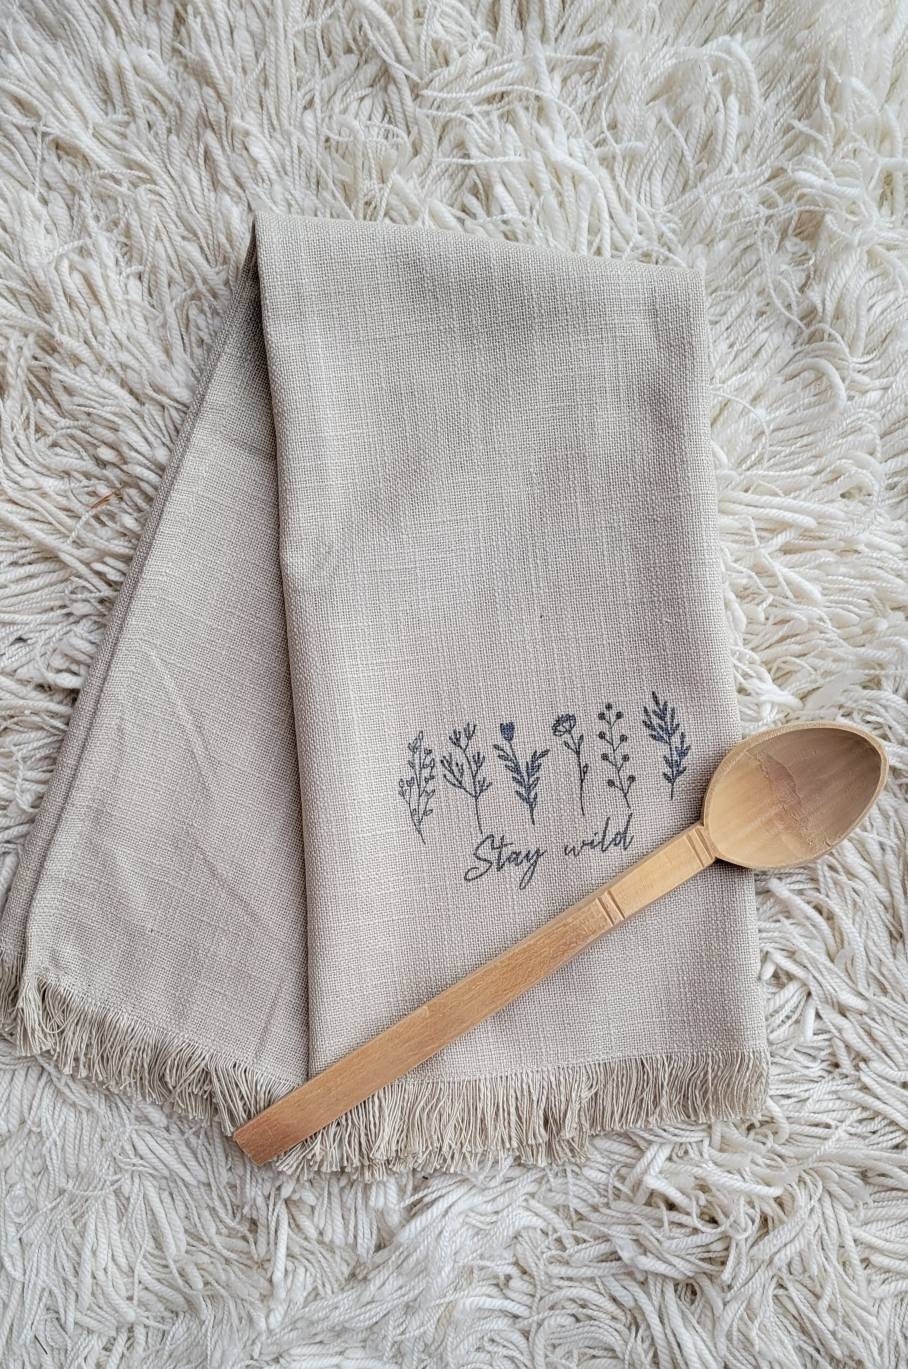 100% Cotton Dish Towel Stay Wild Kitchen Dish Tea Towel 